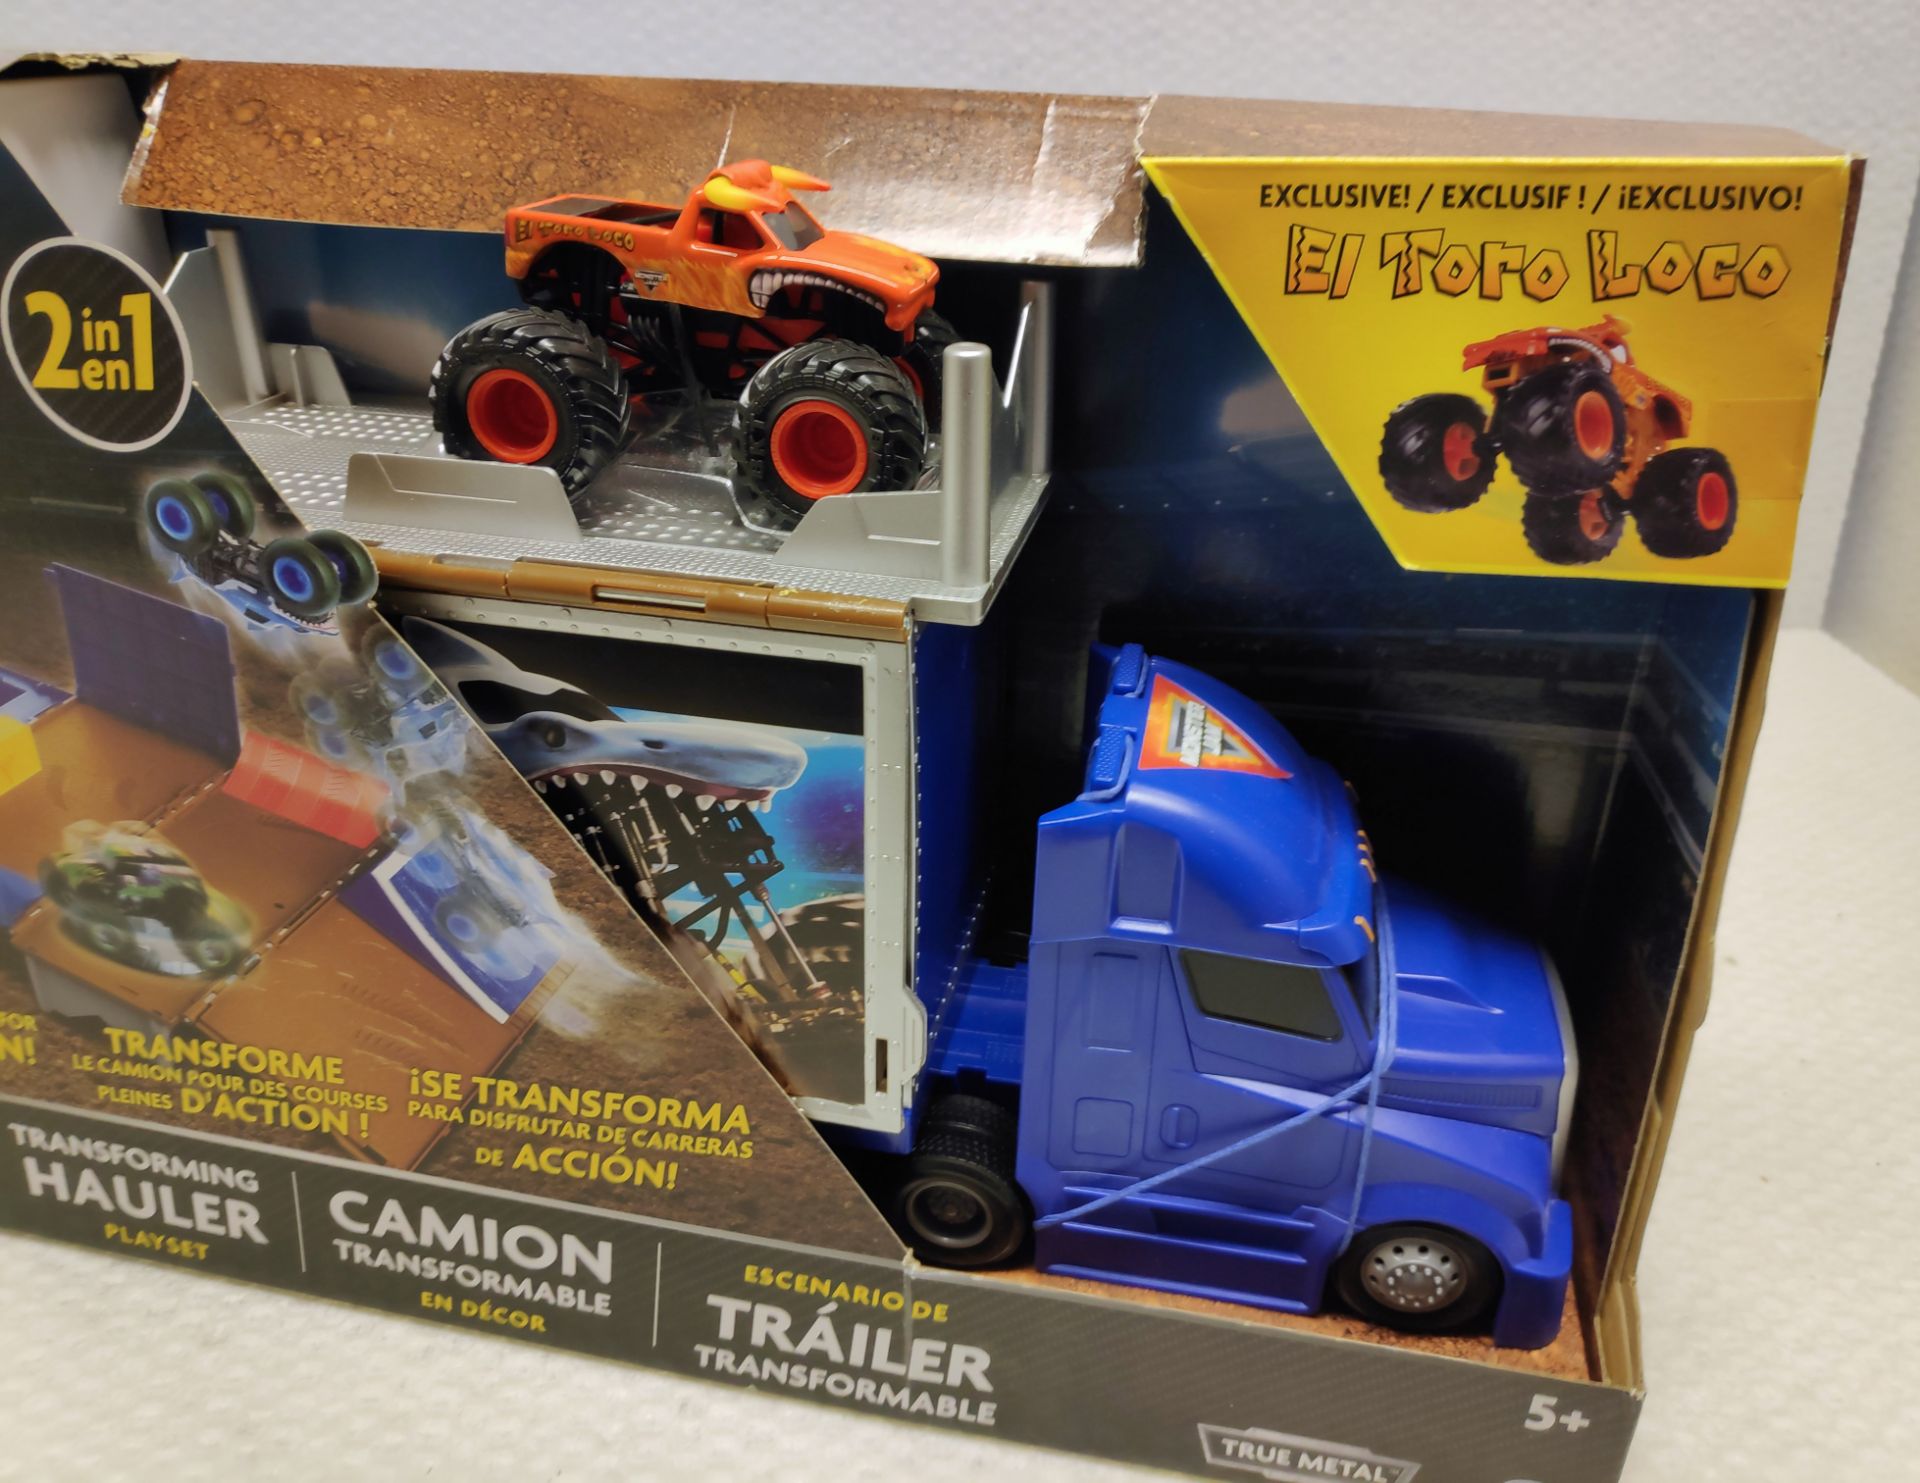 1 x Monster Jam Transforming Hauler Playset with El Toro Monster Truck - Image 4 of 6